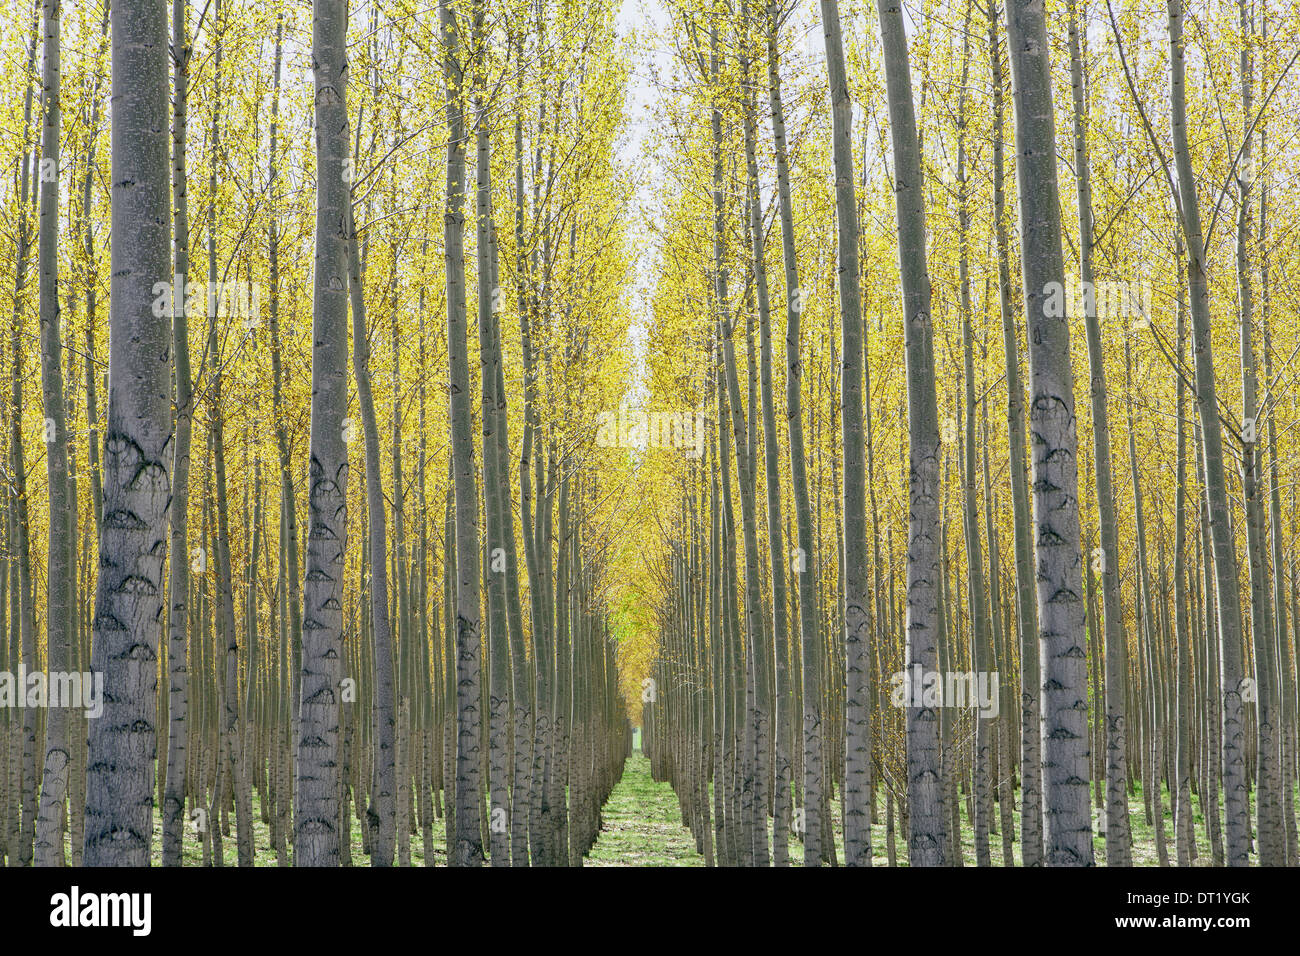 Rows of commercially grown poplar trees on a tree farm near Pendleton Oregon Stock Photo